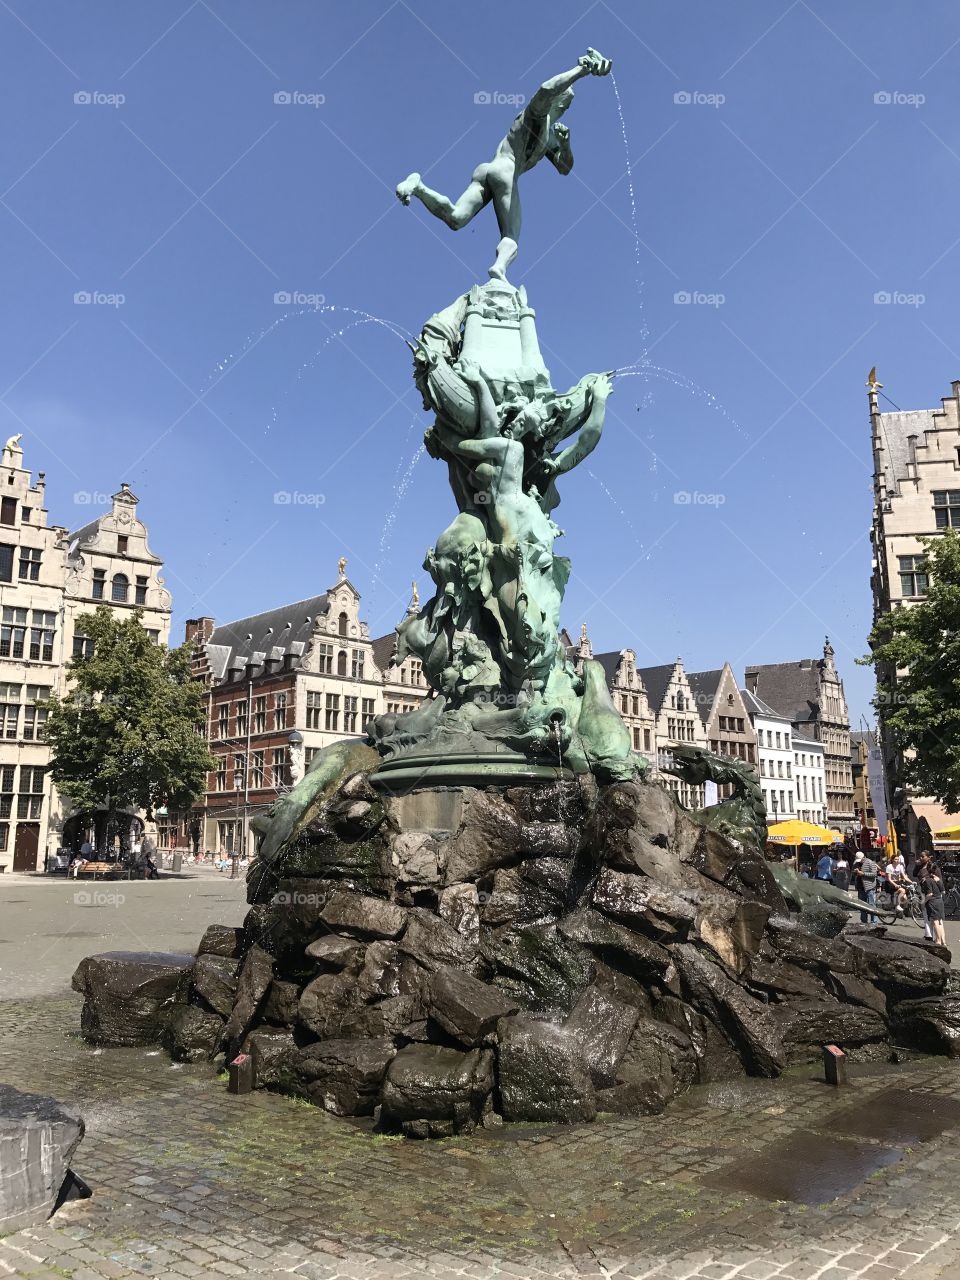 Fountain 
Old
Belgium 
Square
Water
